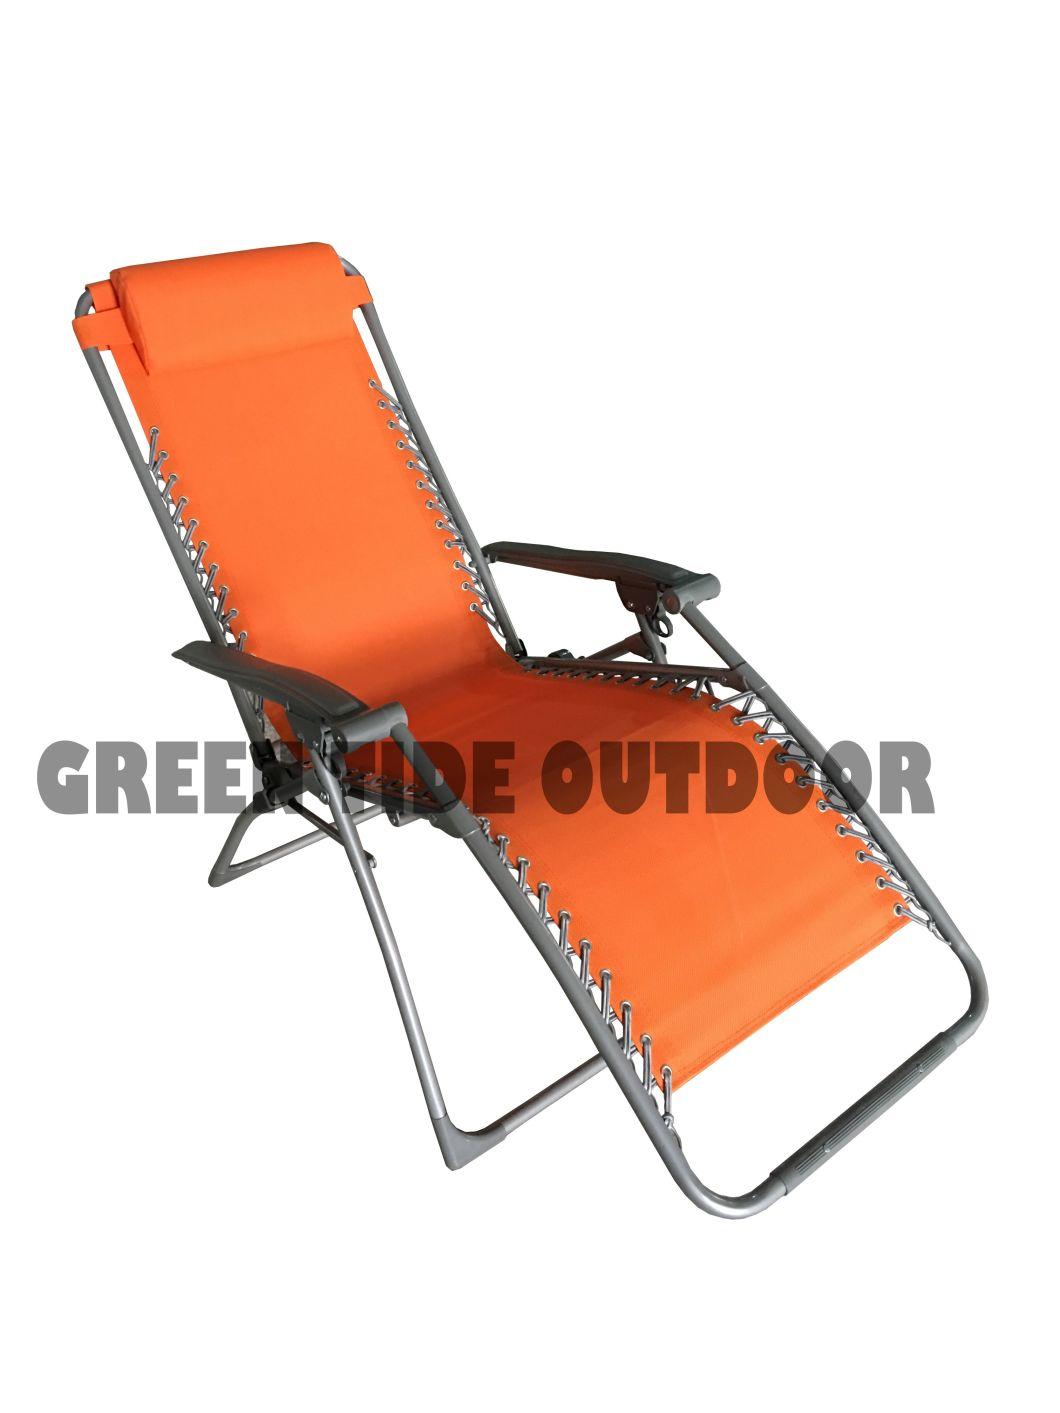 Outdoor Garden Patio Furniture Camping Folding Beach Chair